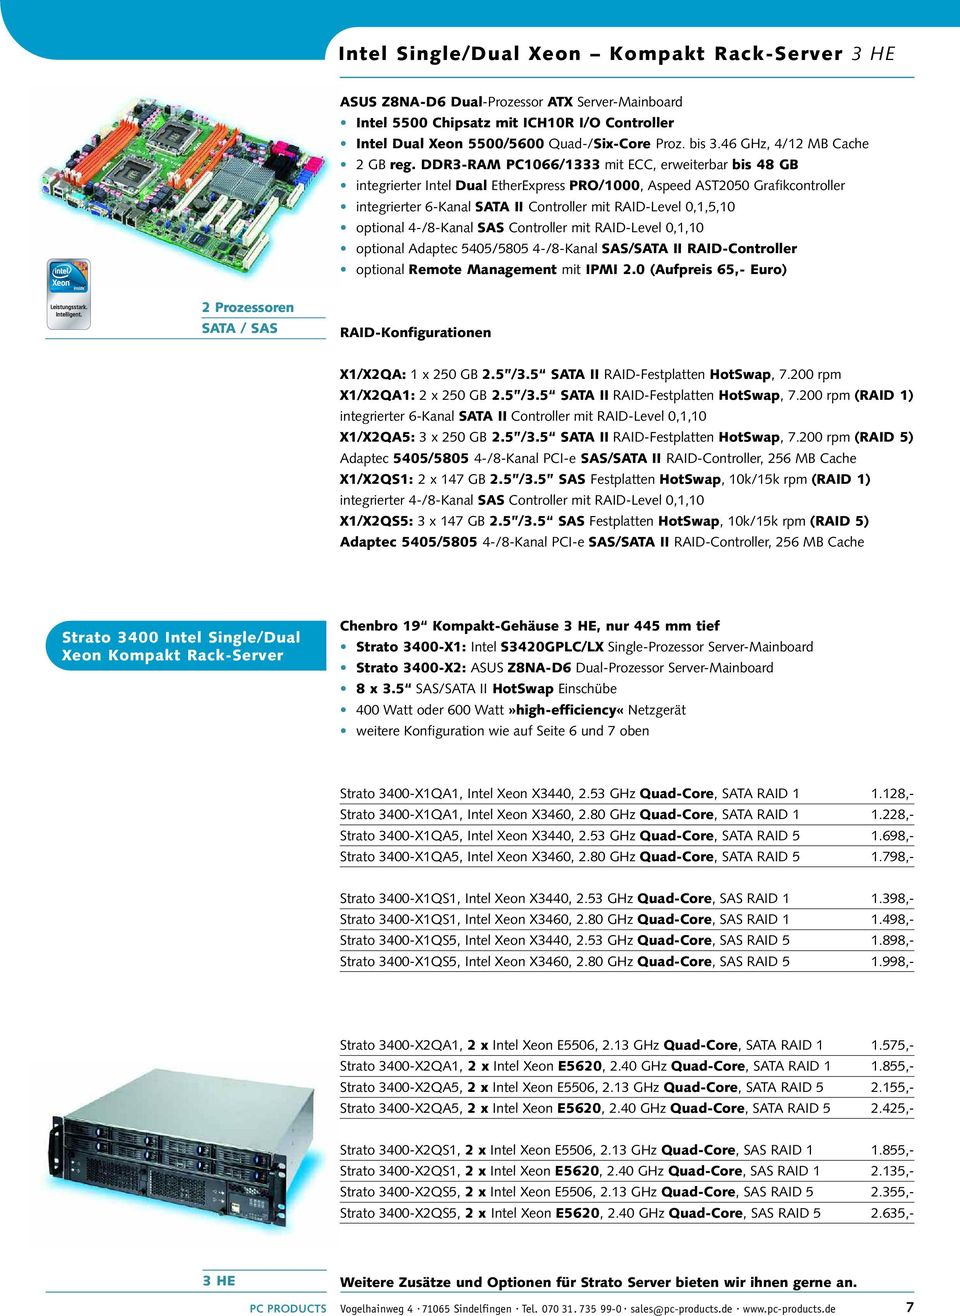 DDR3-RAM PC1066/1333 mit ECC, erweiterbar bis 48 GB integrierter Intel Dual EtherExpress PRO/1000, Aspeed AST2050 Grafikcontroller integrierter 6-Kanal II Controller mit RAID-Level 0,1,5,10 optional